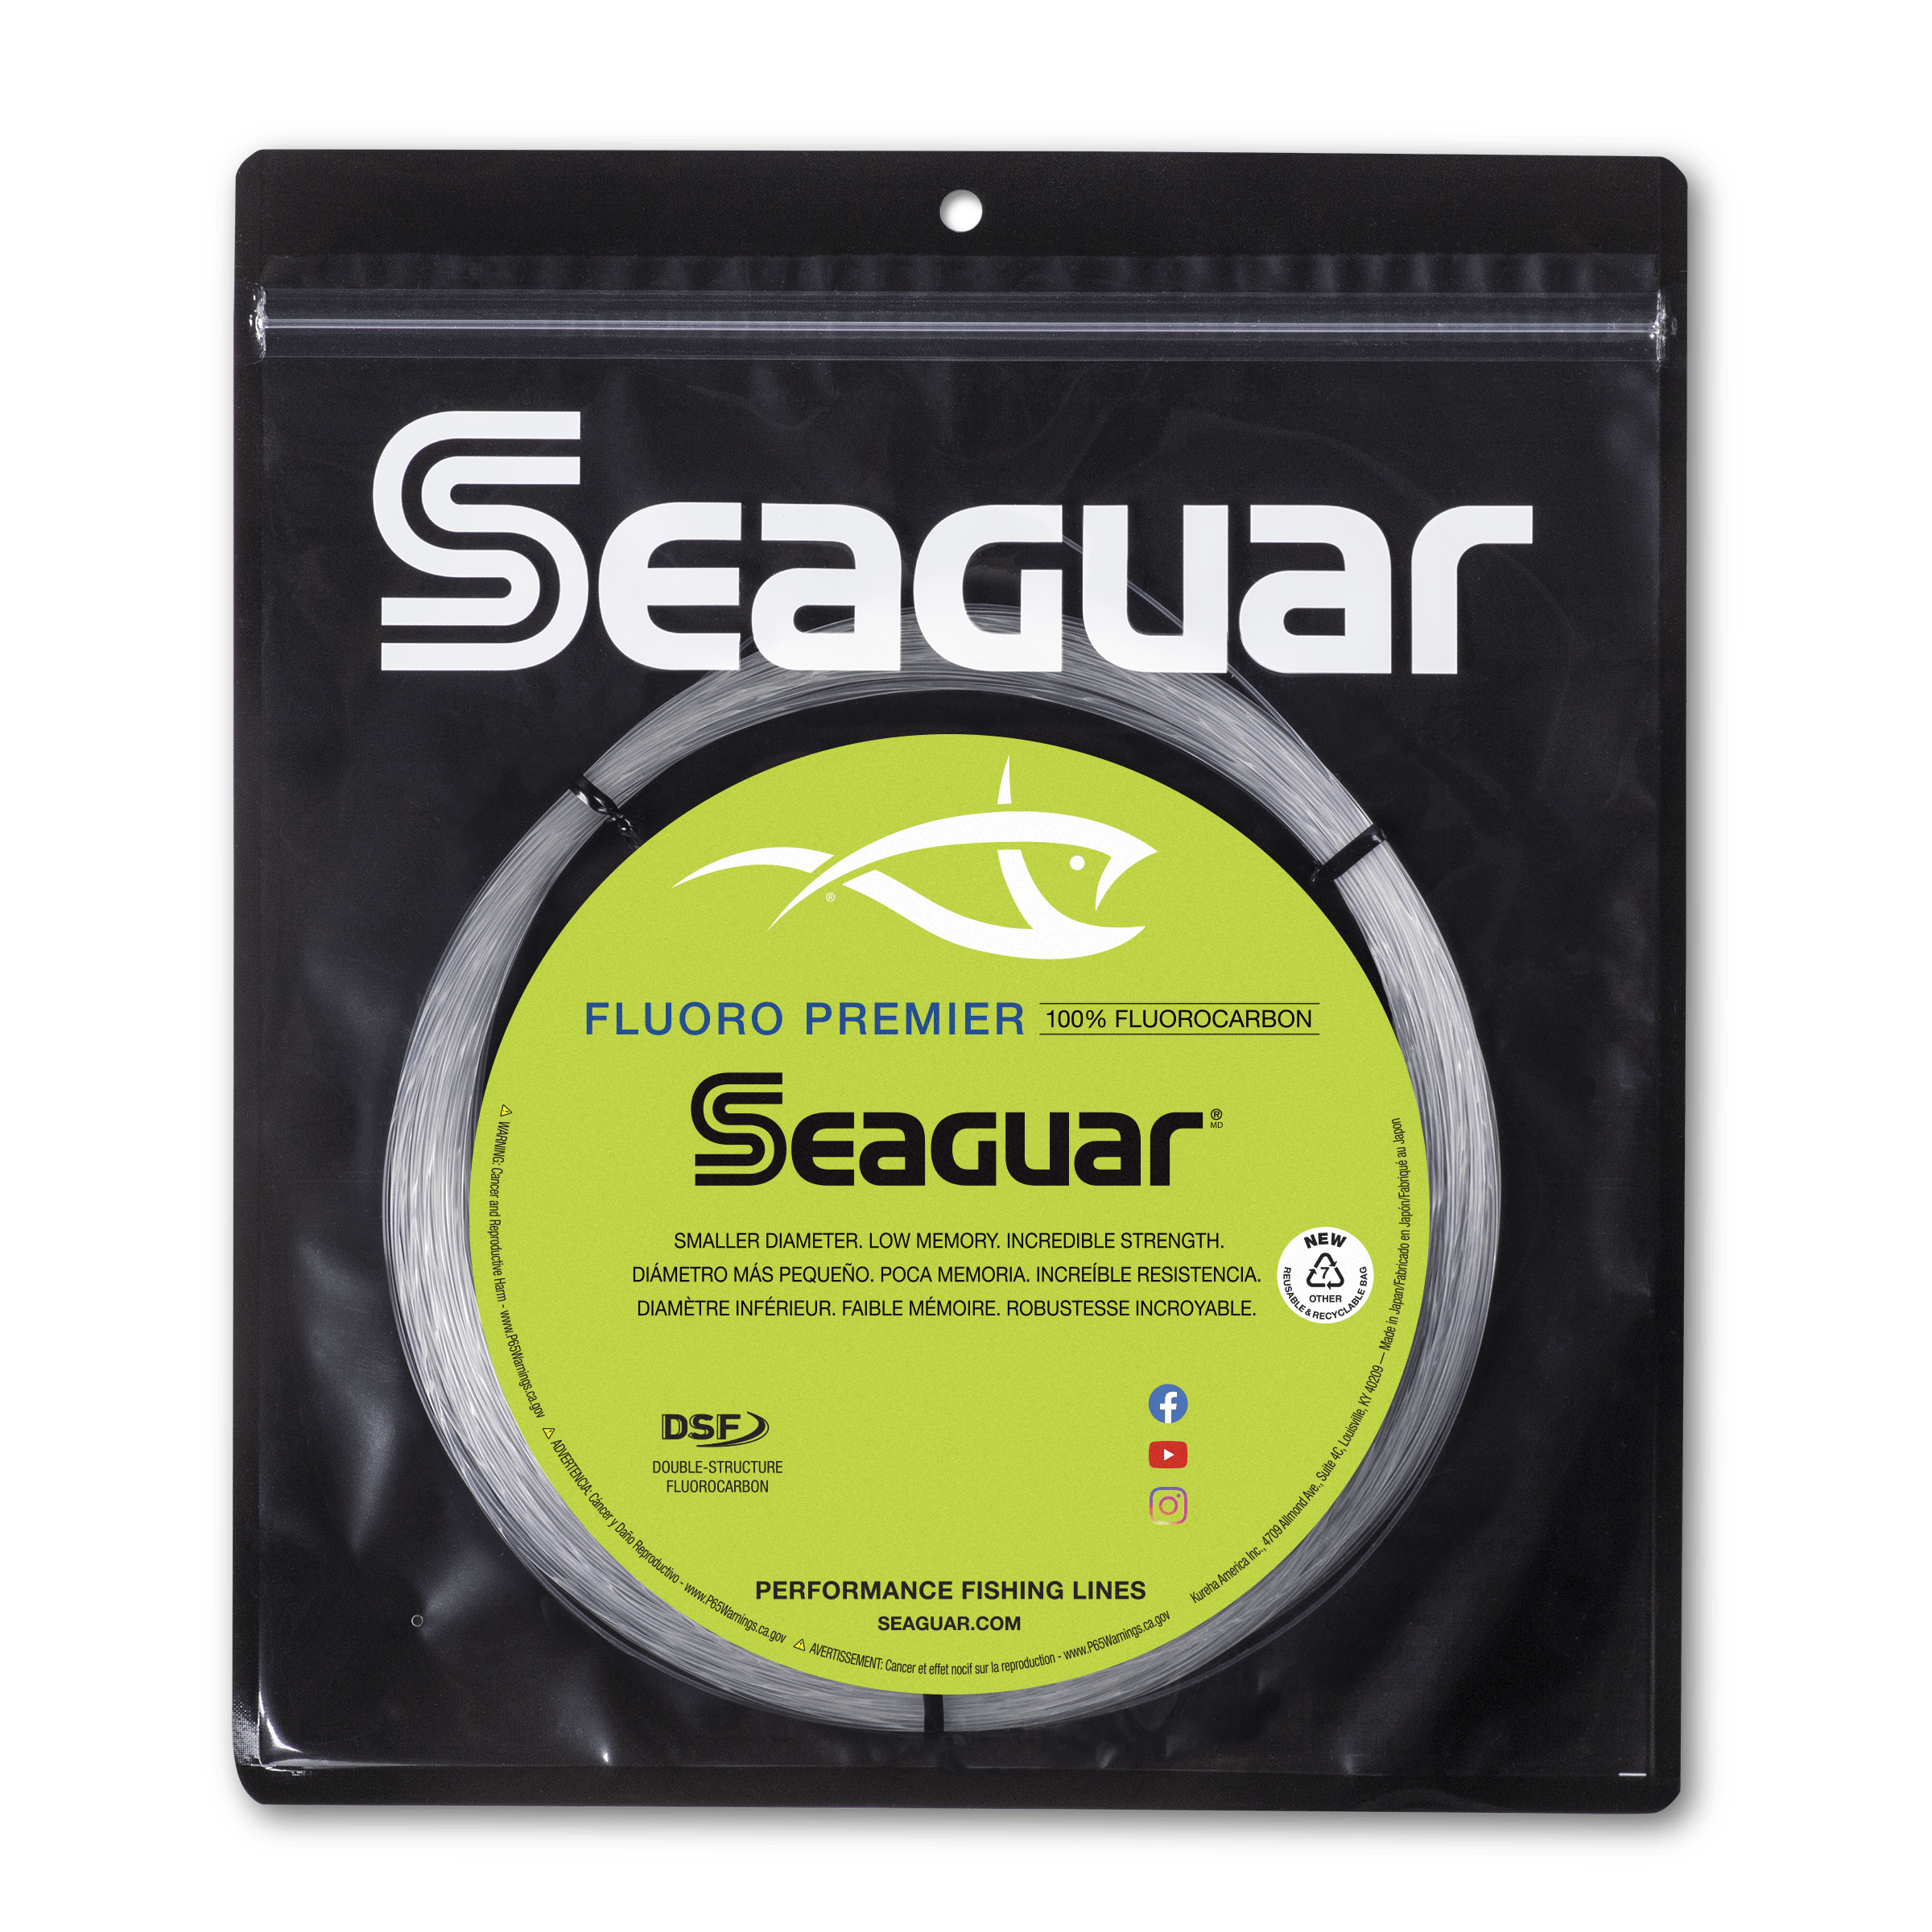 Seaguar Threadlock Hollow Core Braid - 200lb. - 600 yd. - White